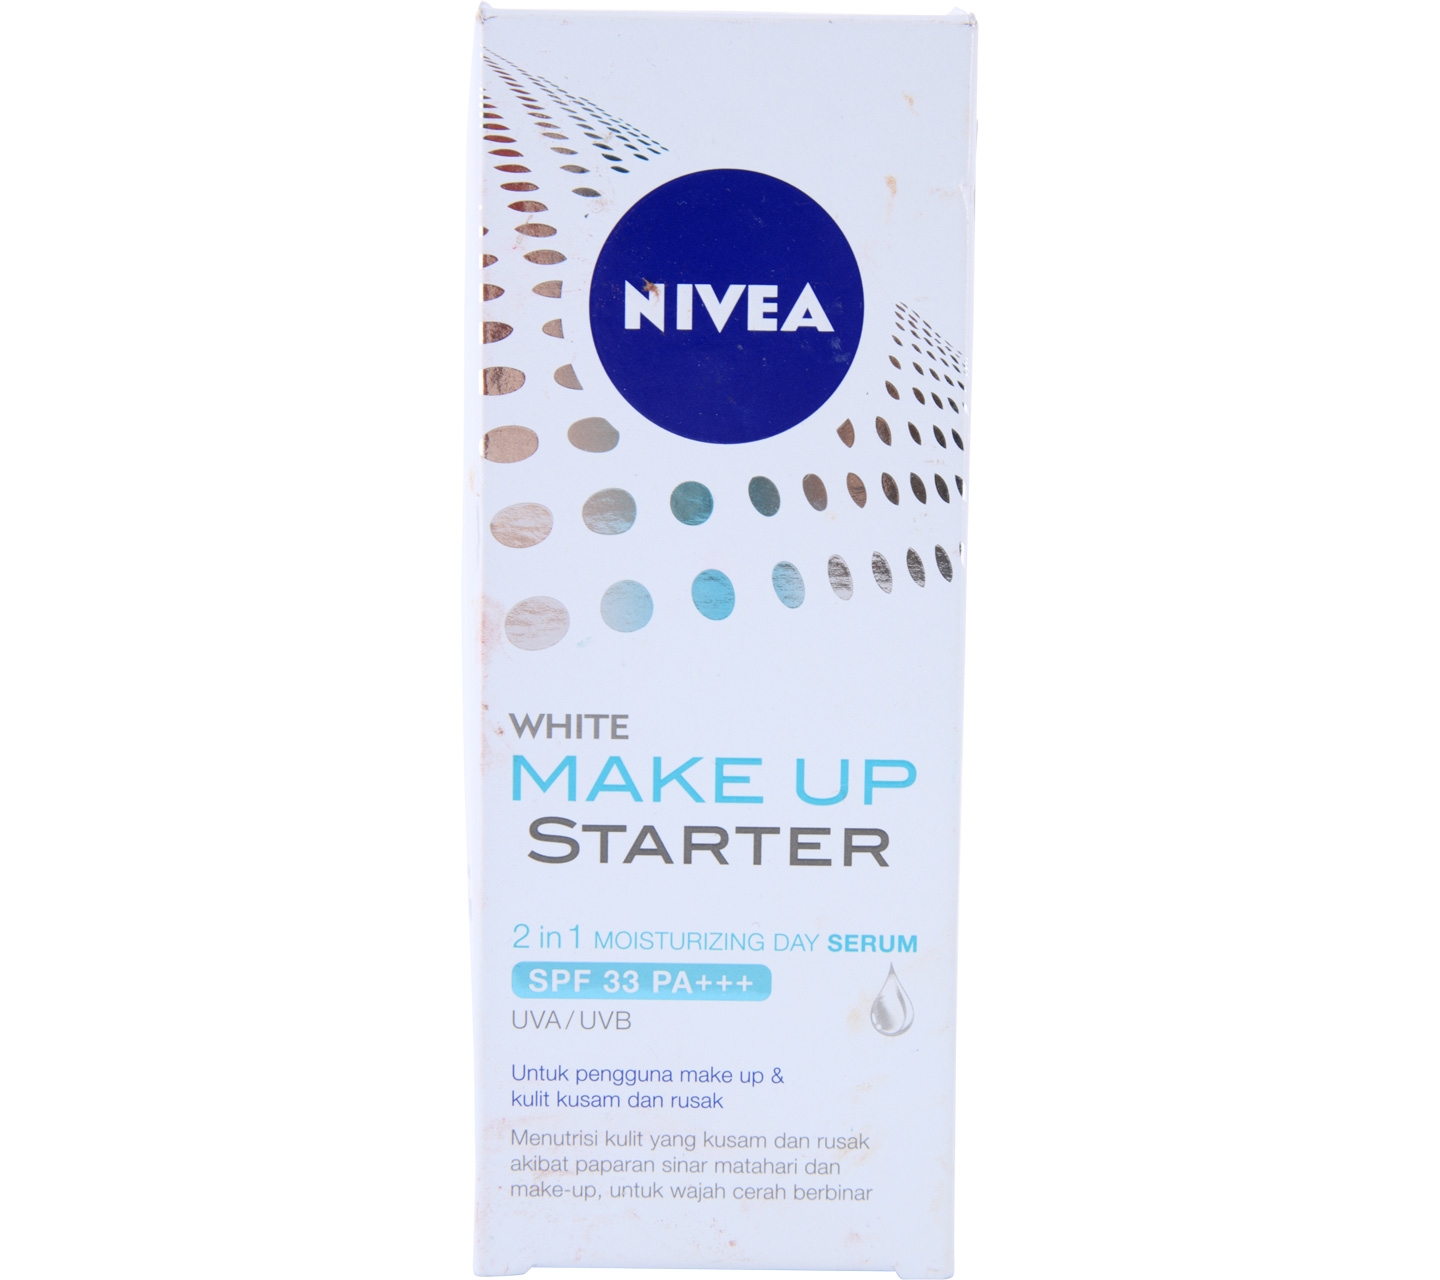 Nivea White Make Up Starter 2 in 1 Moisturizing Day Serum Faces